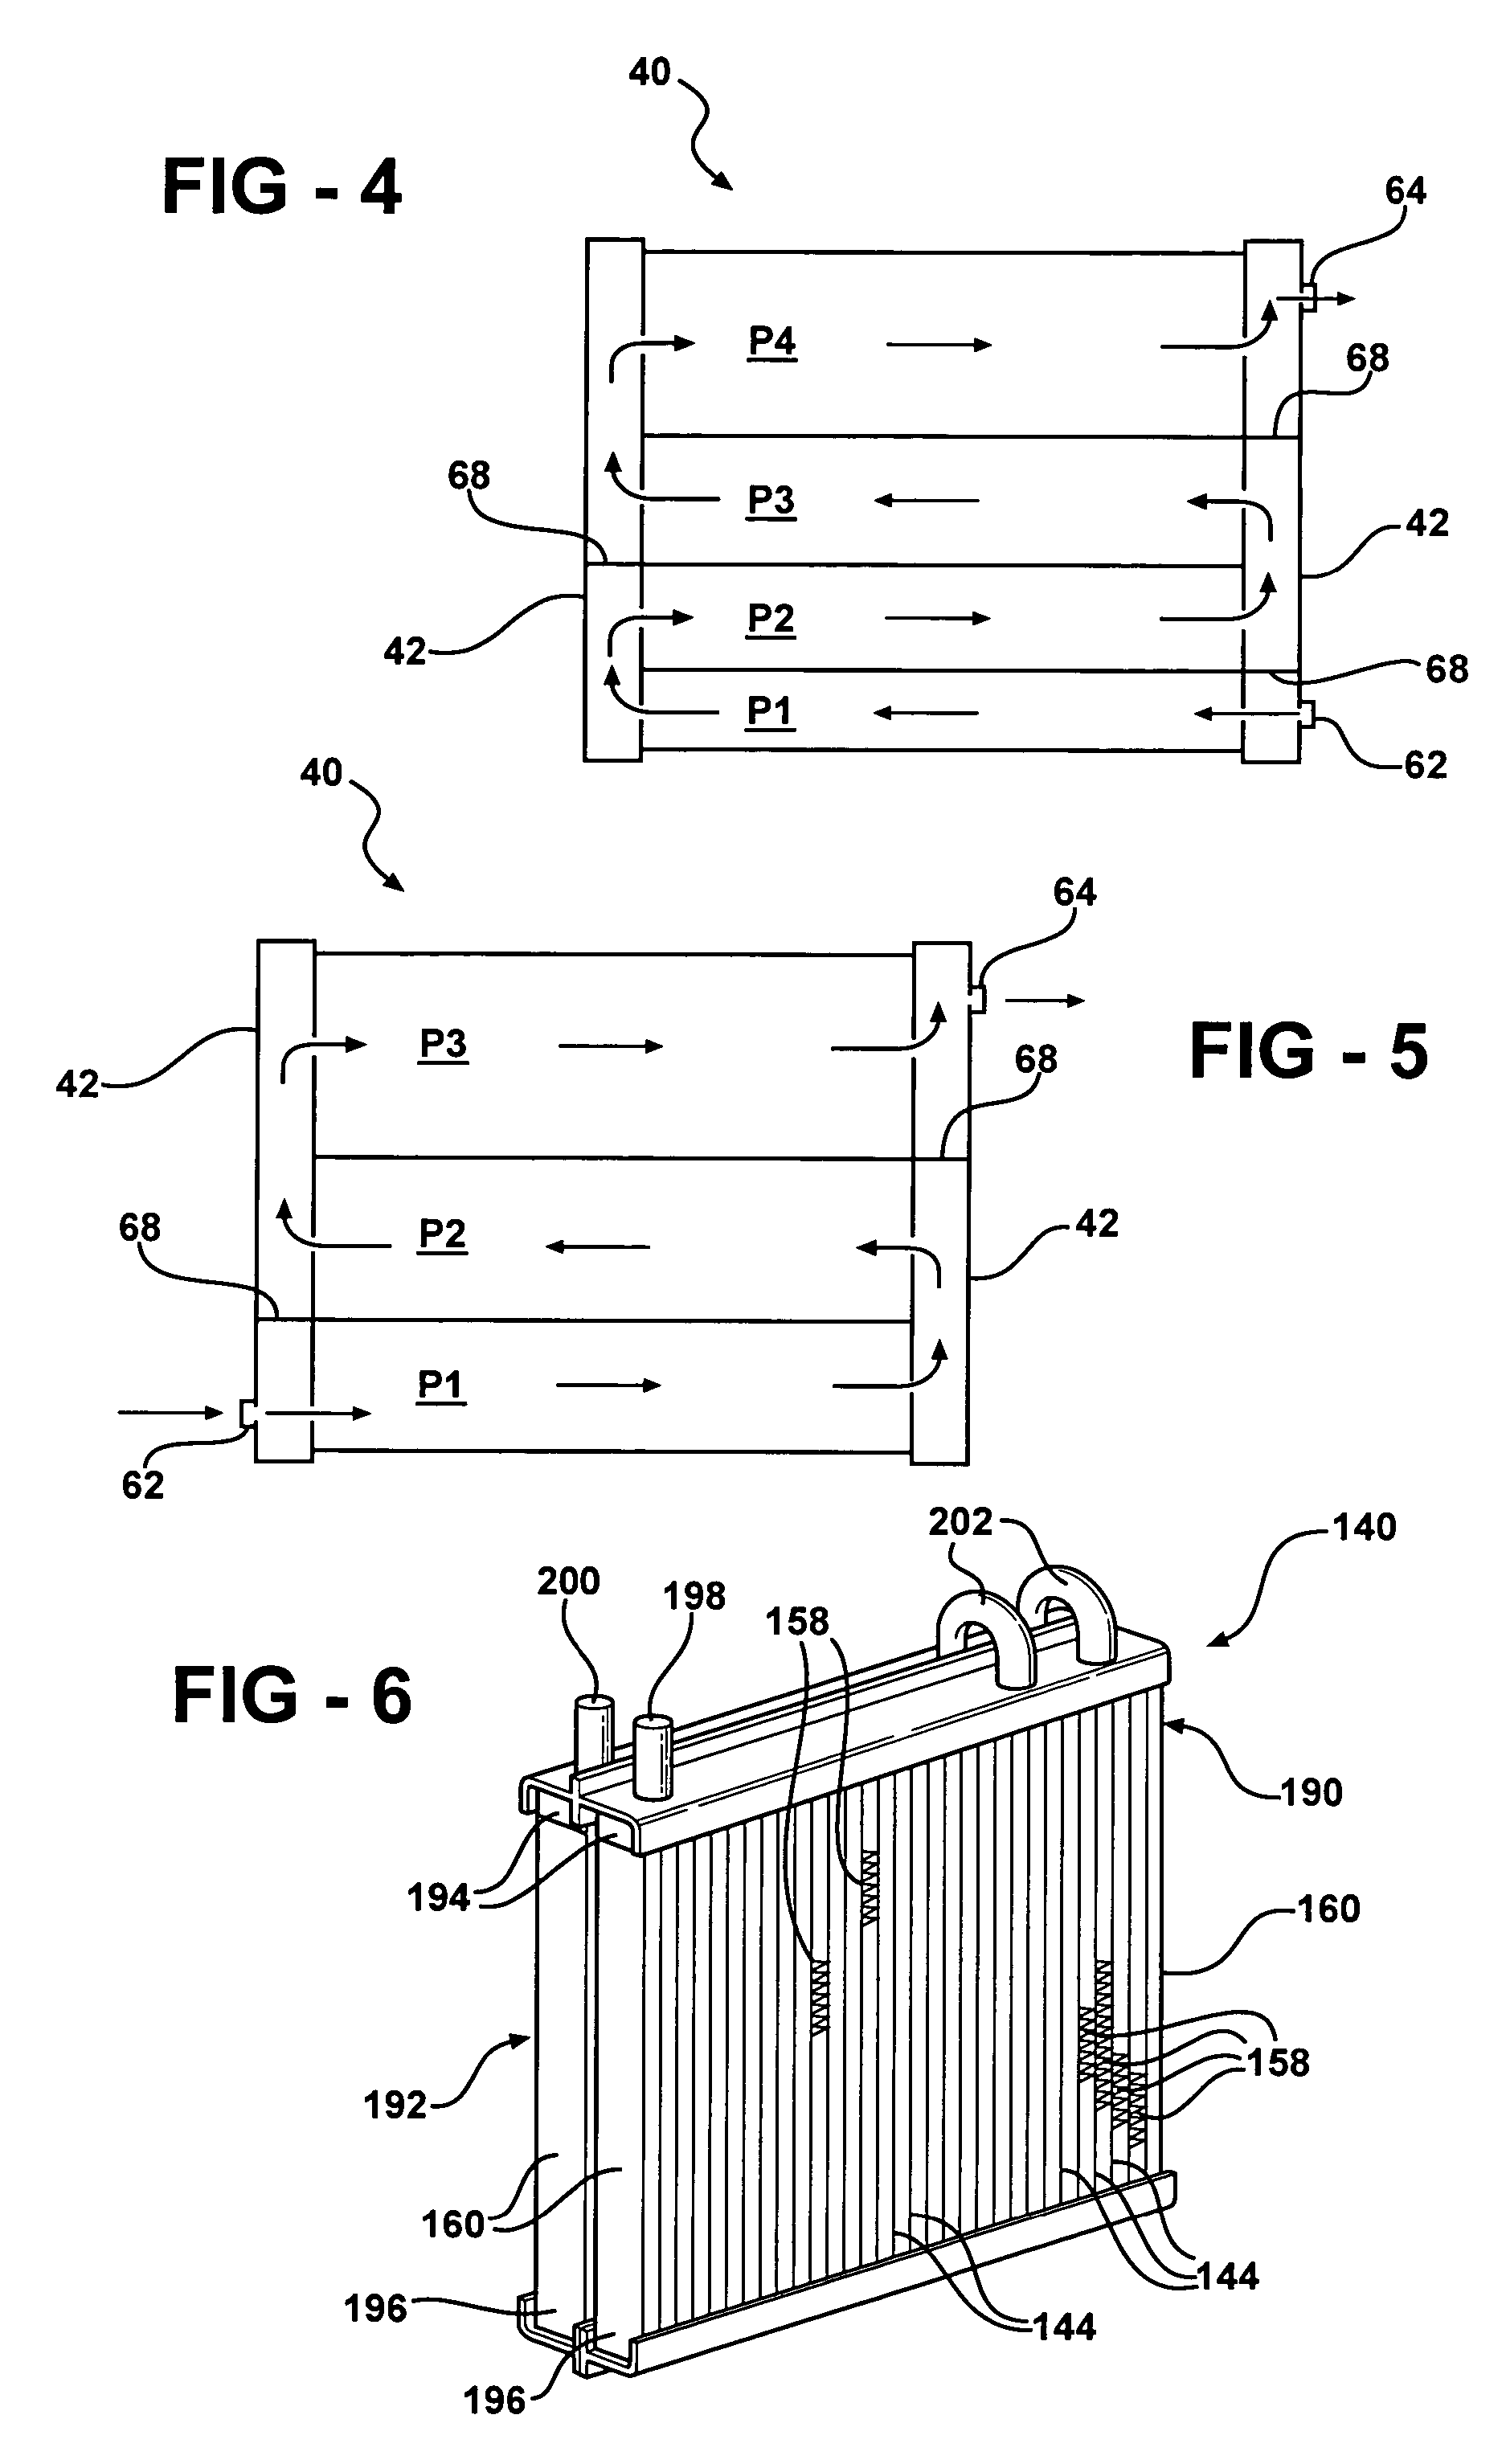 Flat tube evaporator with enhanced refrigerant flow passages